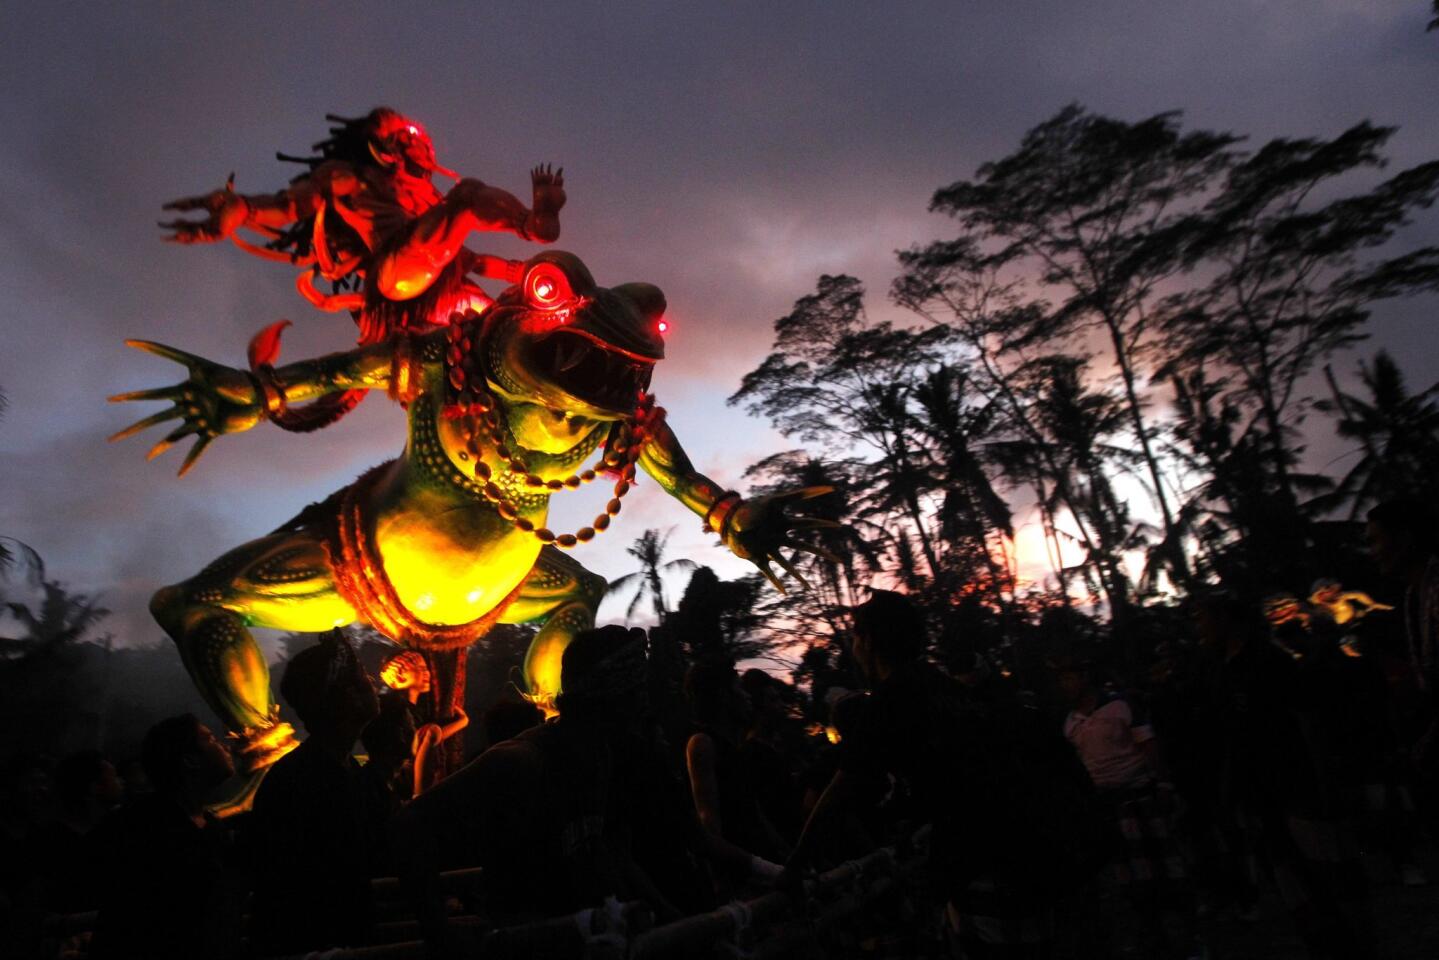 Balinese Hindu New Year celebrations